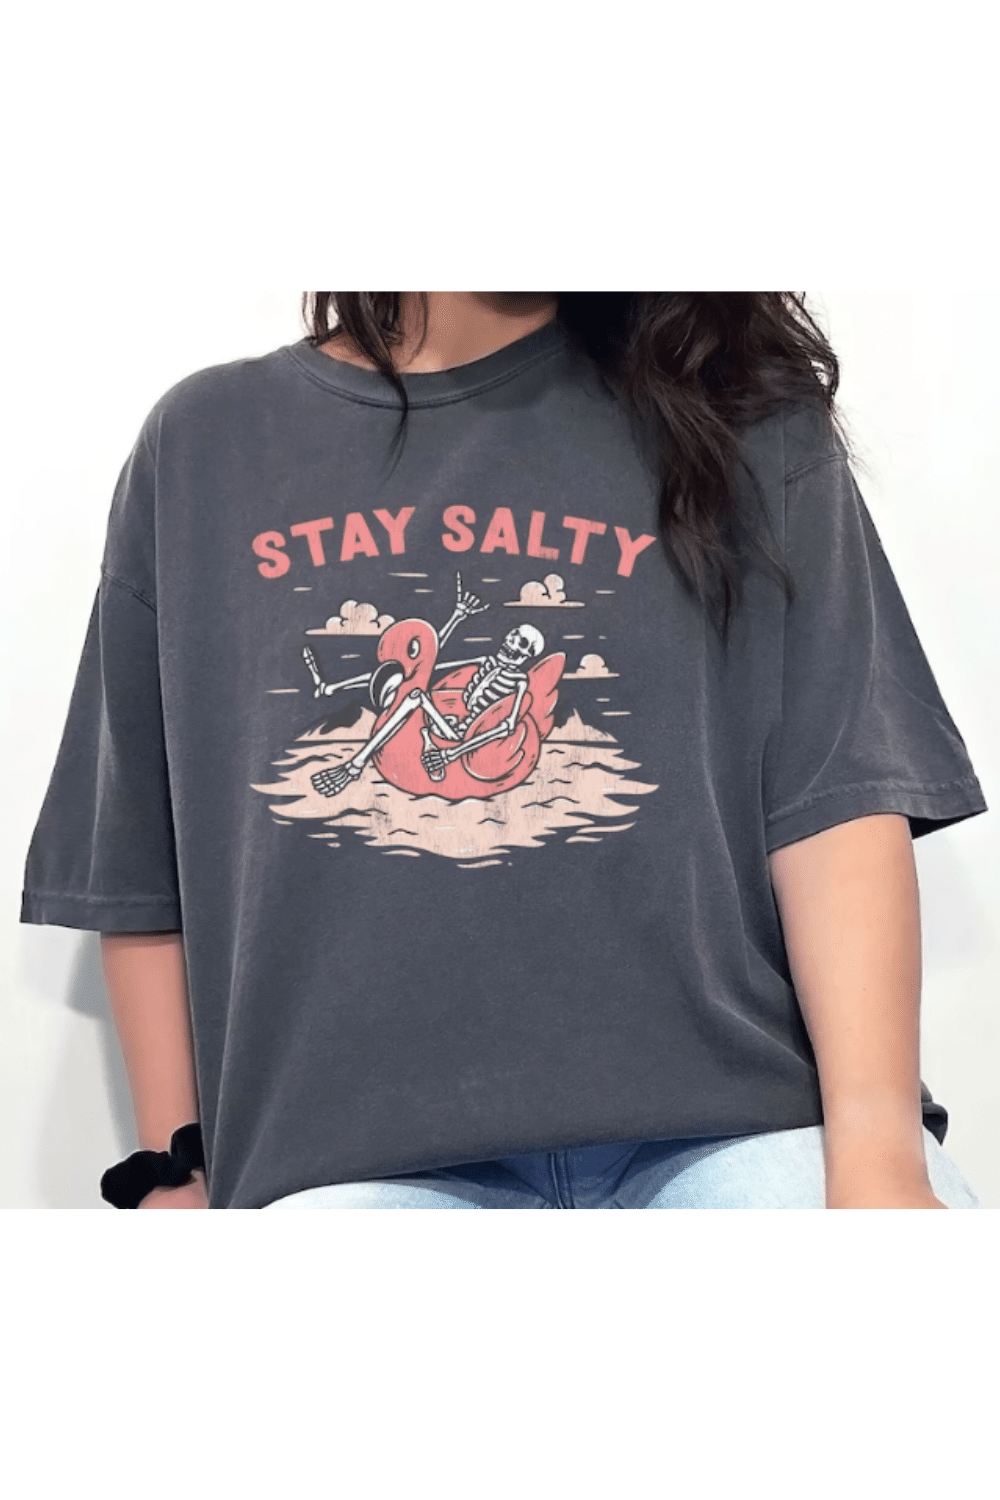 stay salty shirt